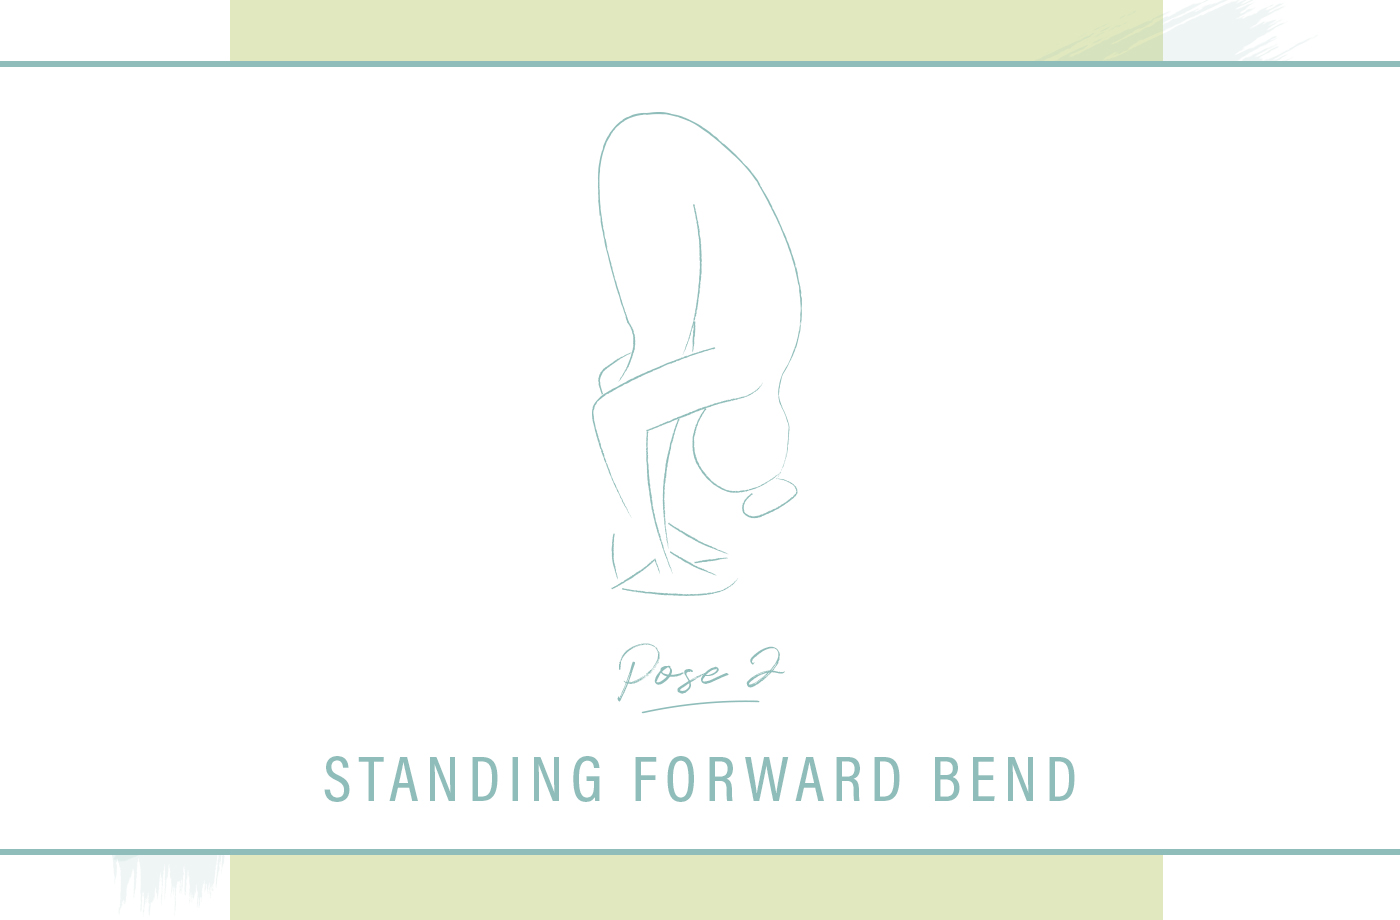 Standing forward bend